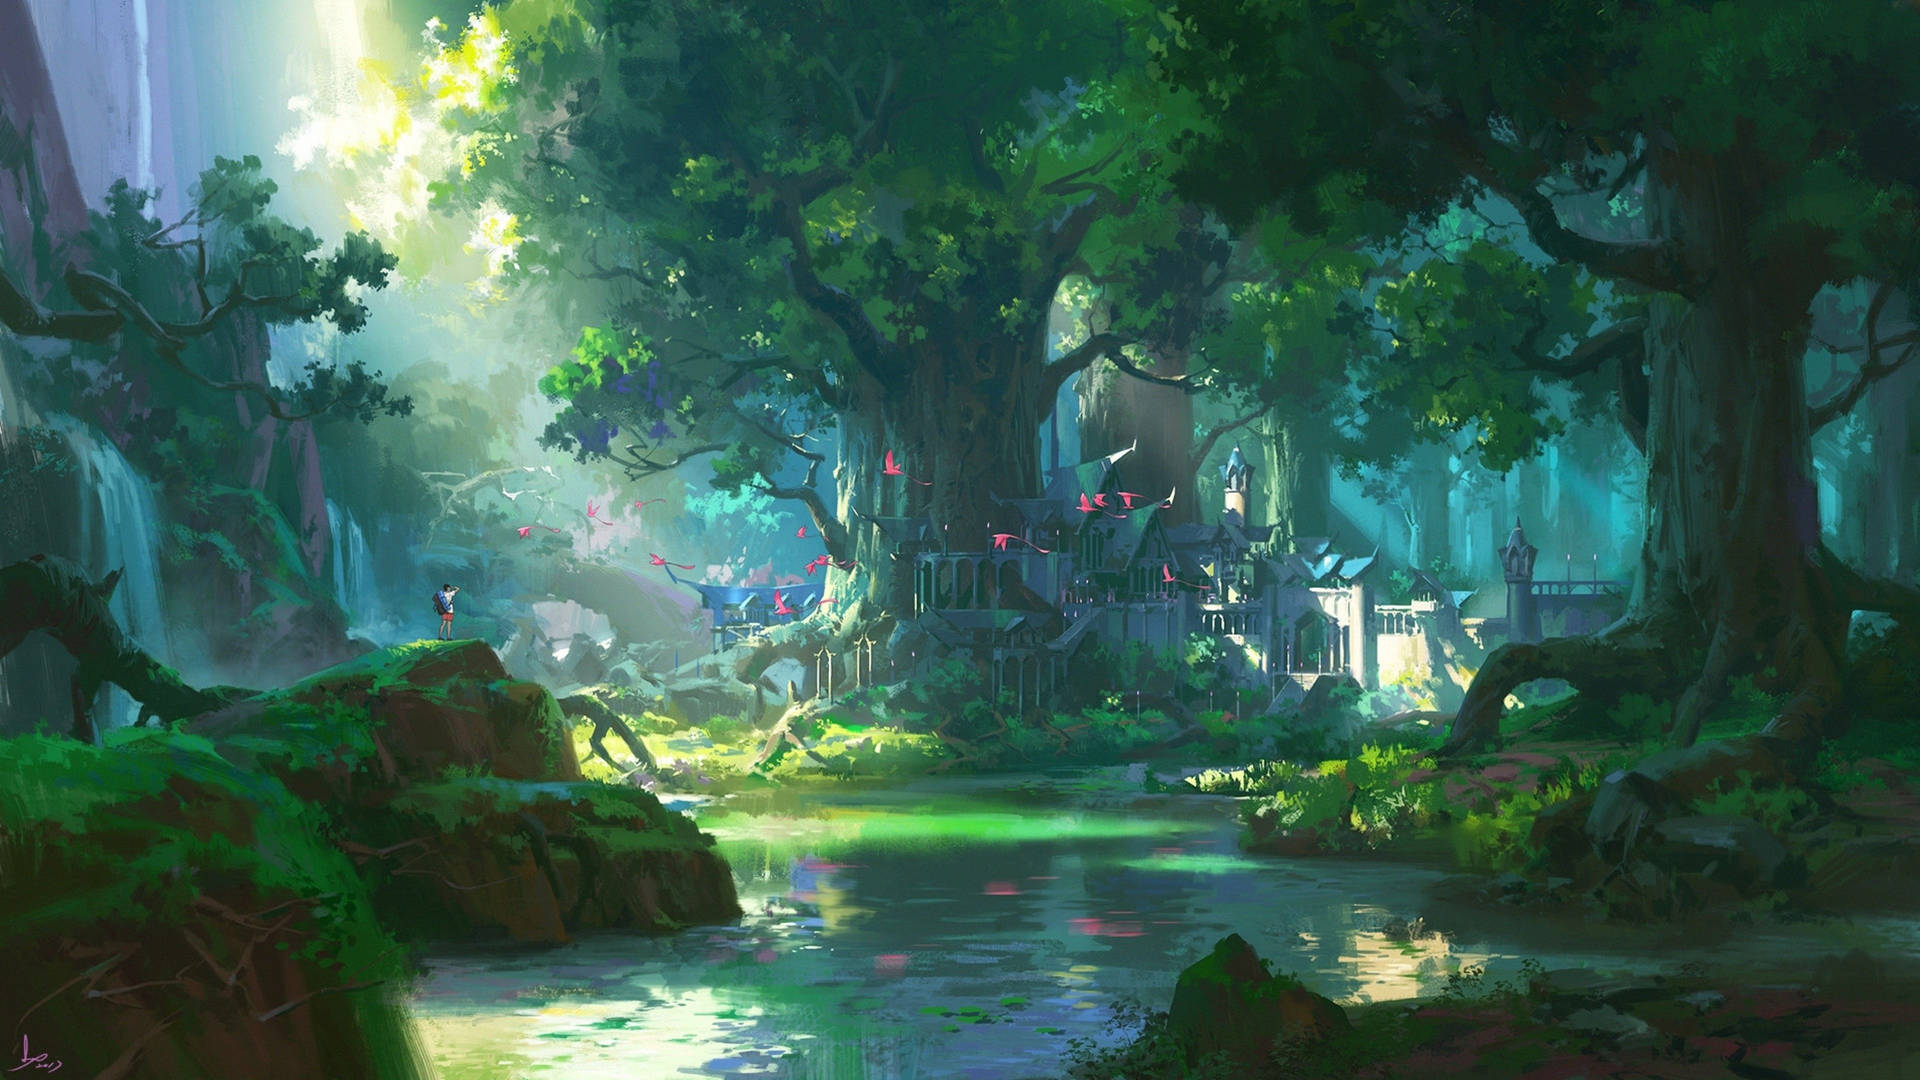 4k Aesthetic Anime Forest Background